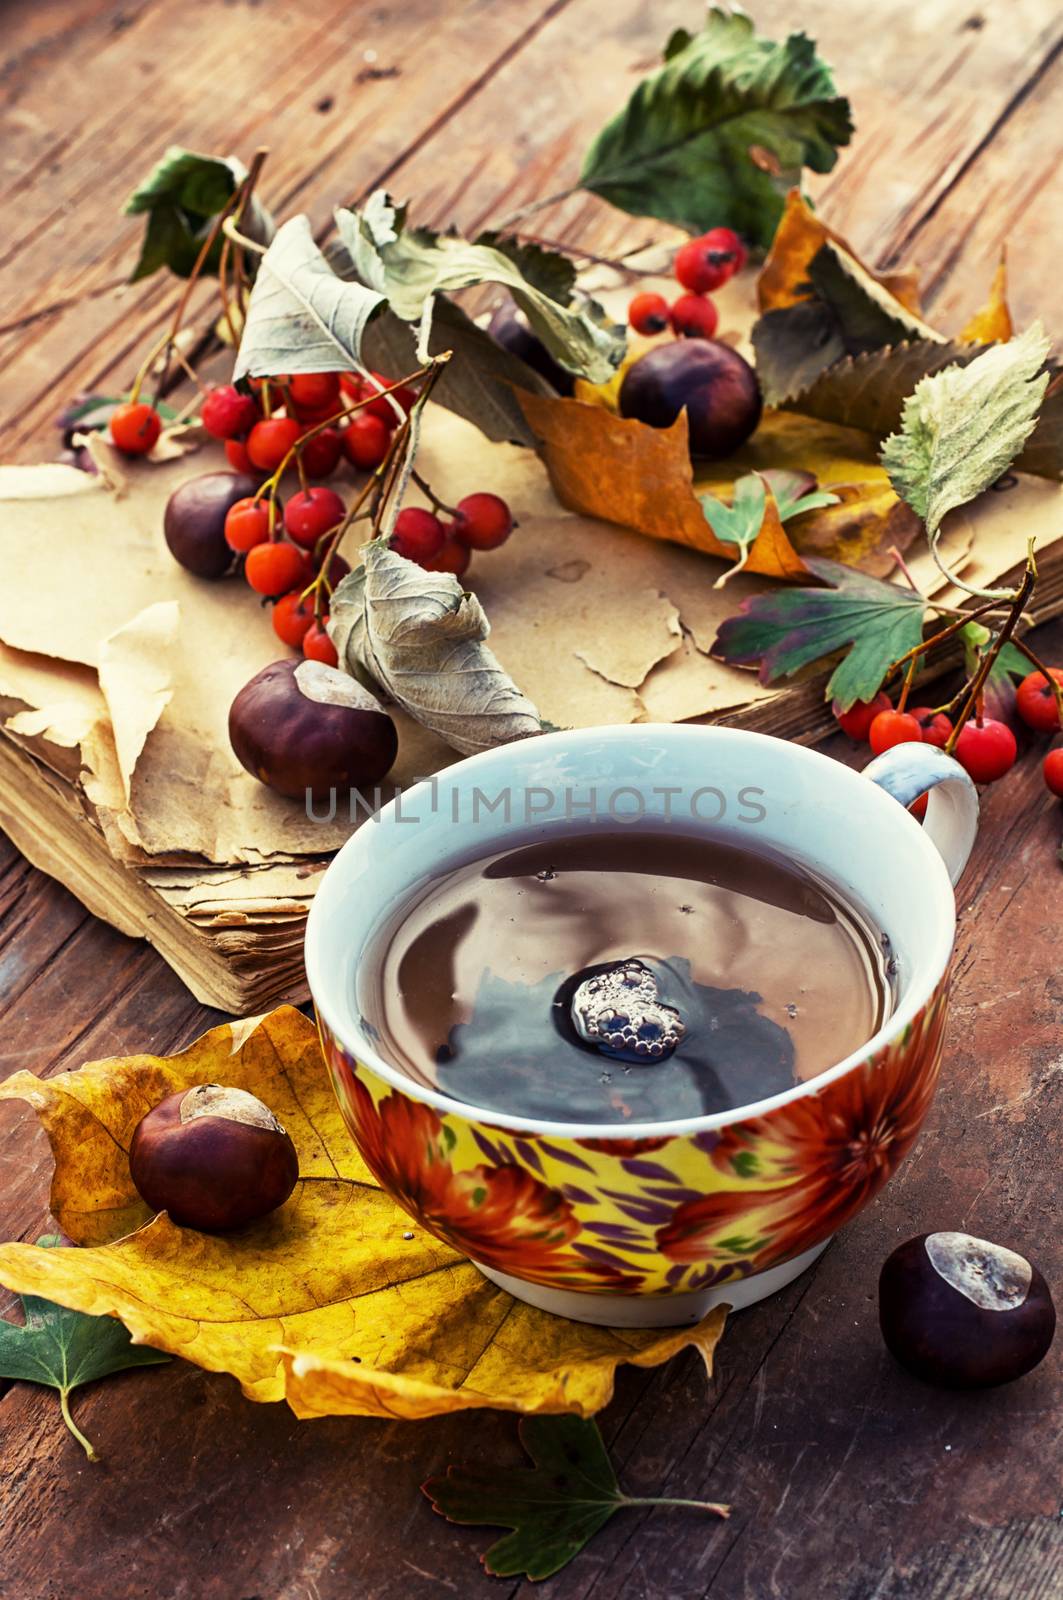 Symbols of autumn, fallen leaves, November, tea